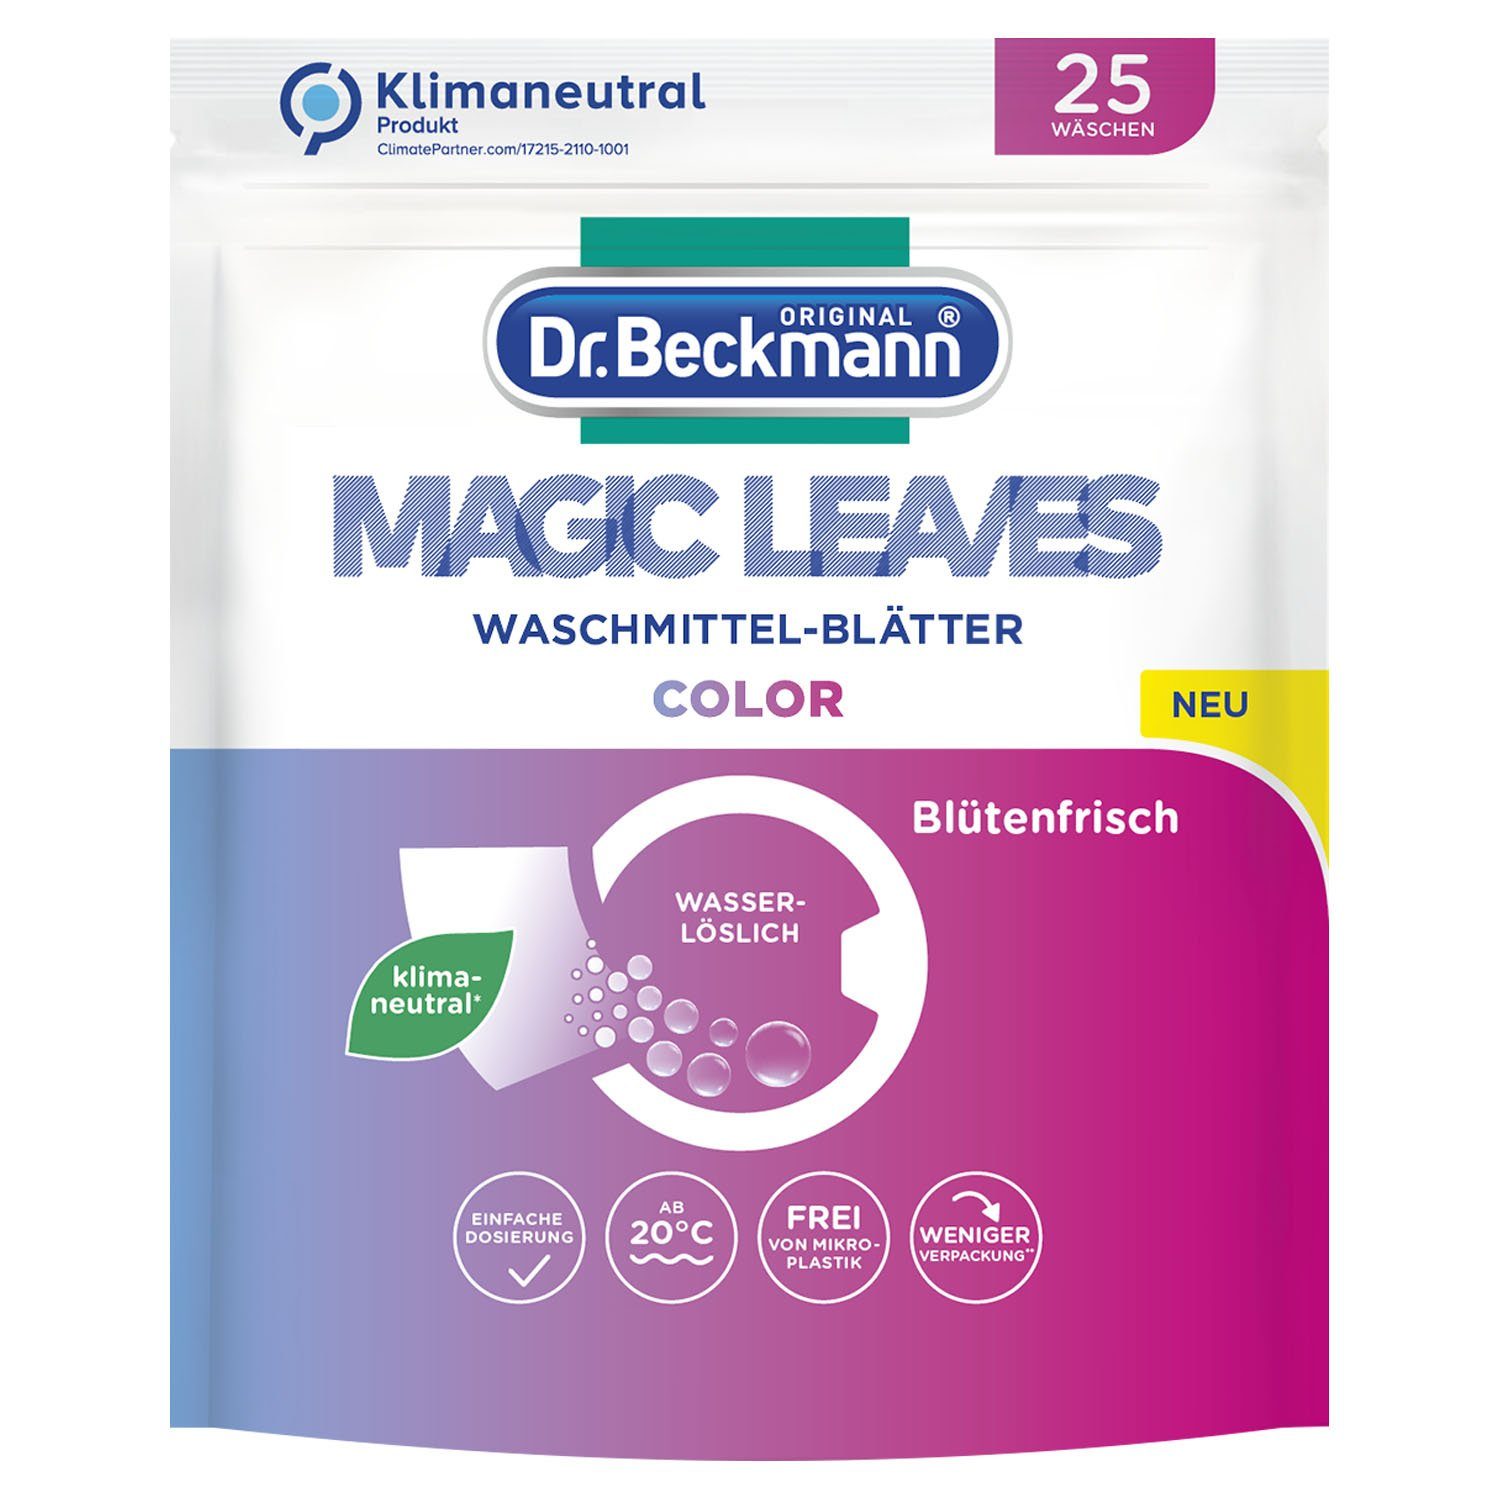 Beckmann MAGIC 25 Colorwaschmittel Blätter (1-St) Dr. wasserlösliche COLOR, Waschblätter, LEAVES